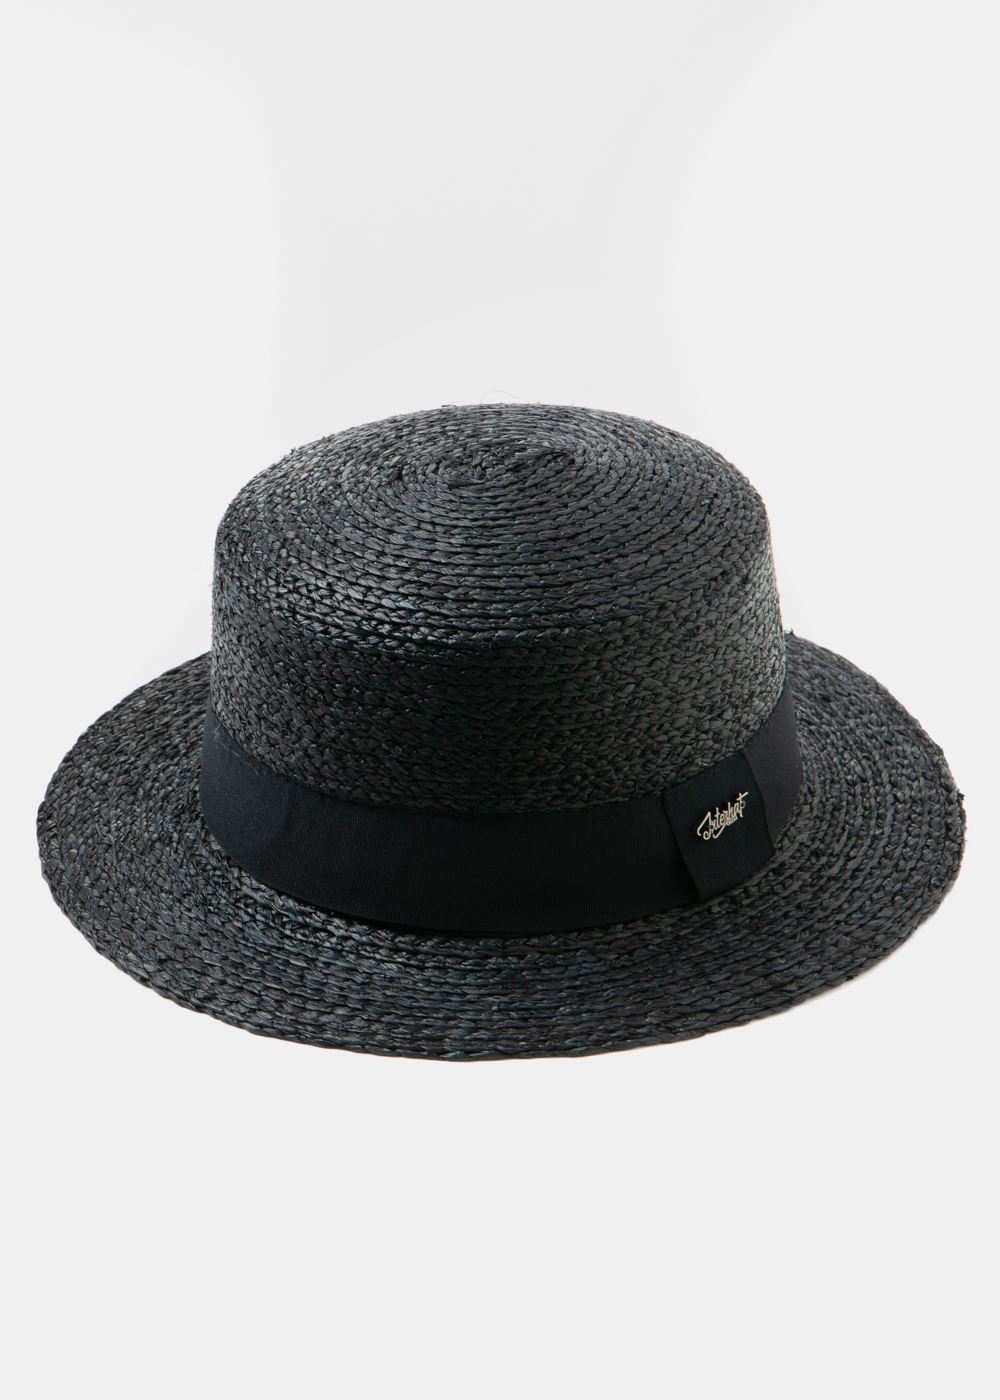 Black Raffia Boater Hat w/ black hatband